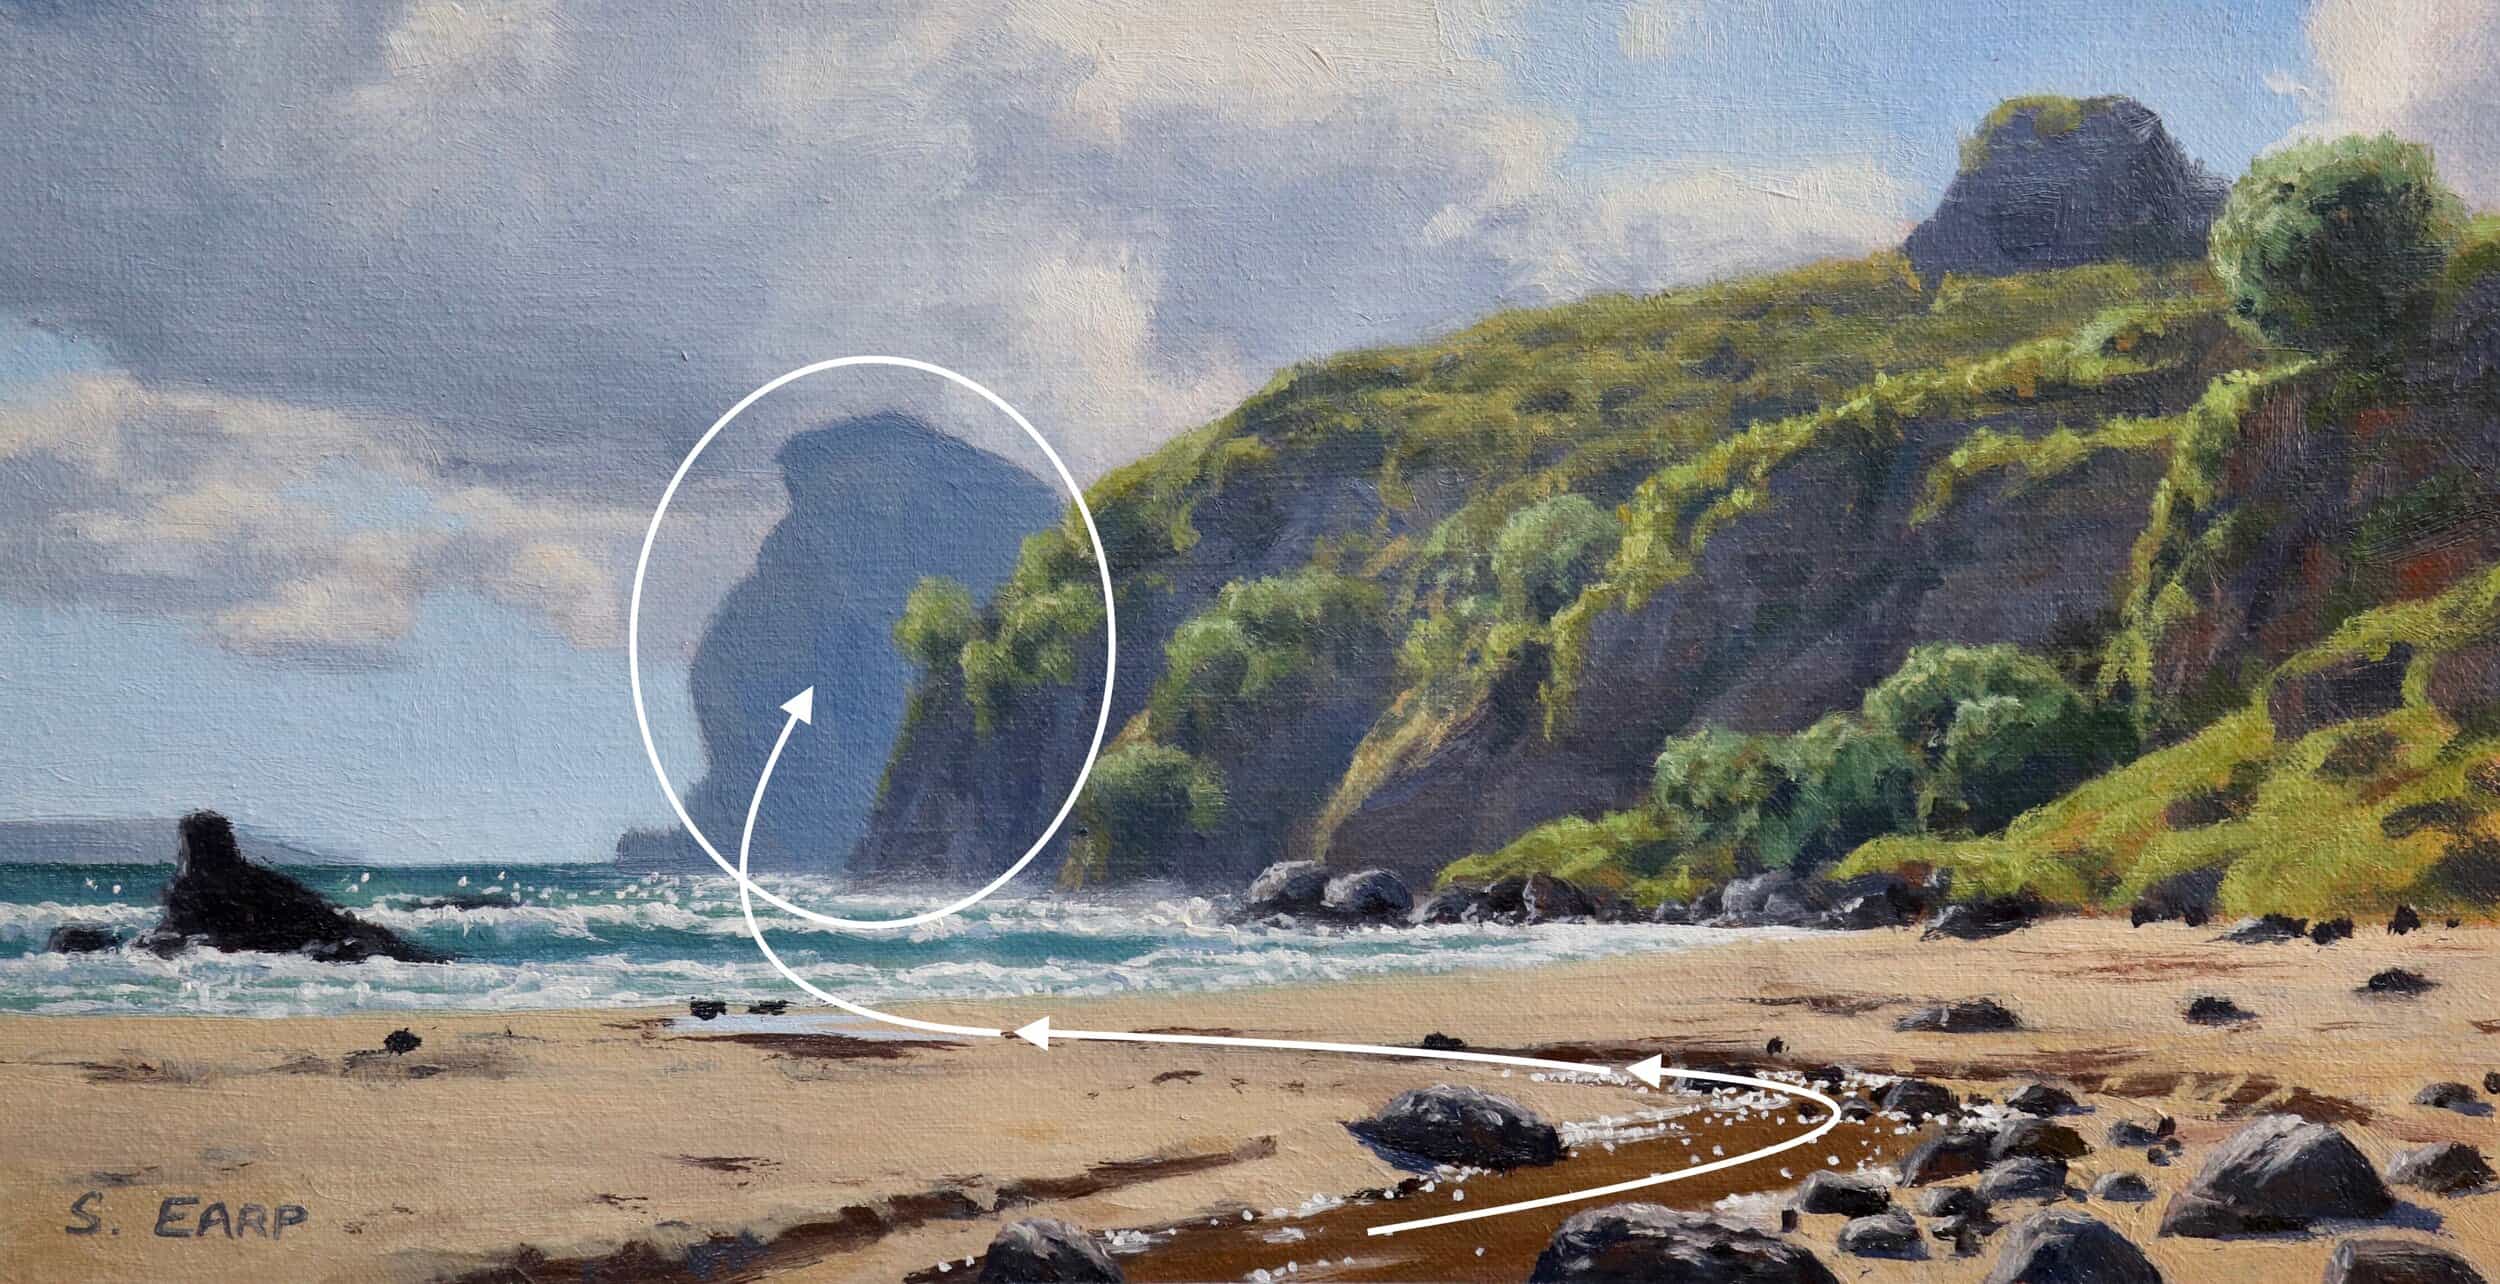 Taupo Bay - Northland _ Samuel Earp - Oil Painting - colour study copy 2.jpeg